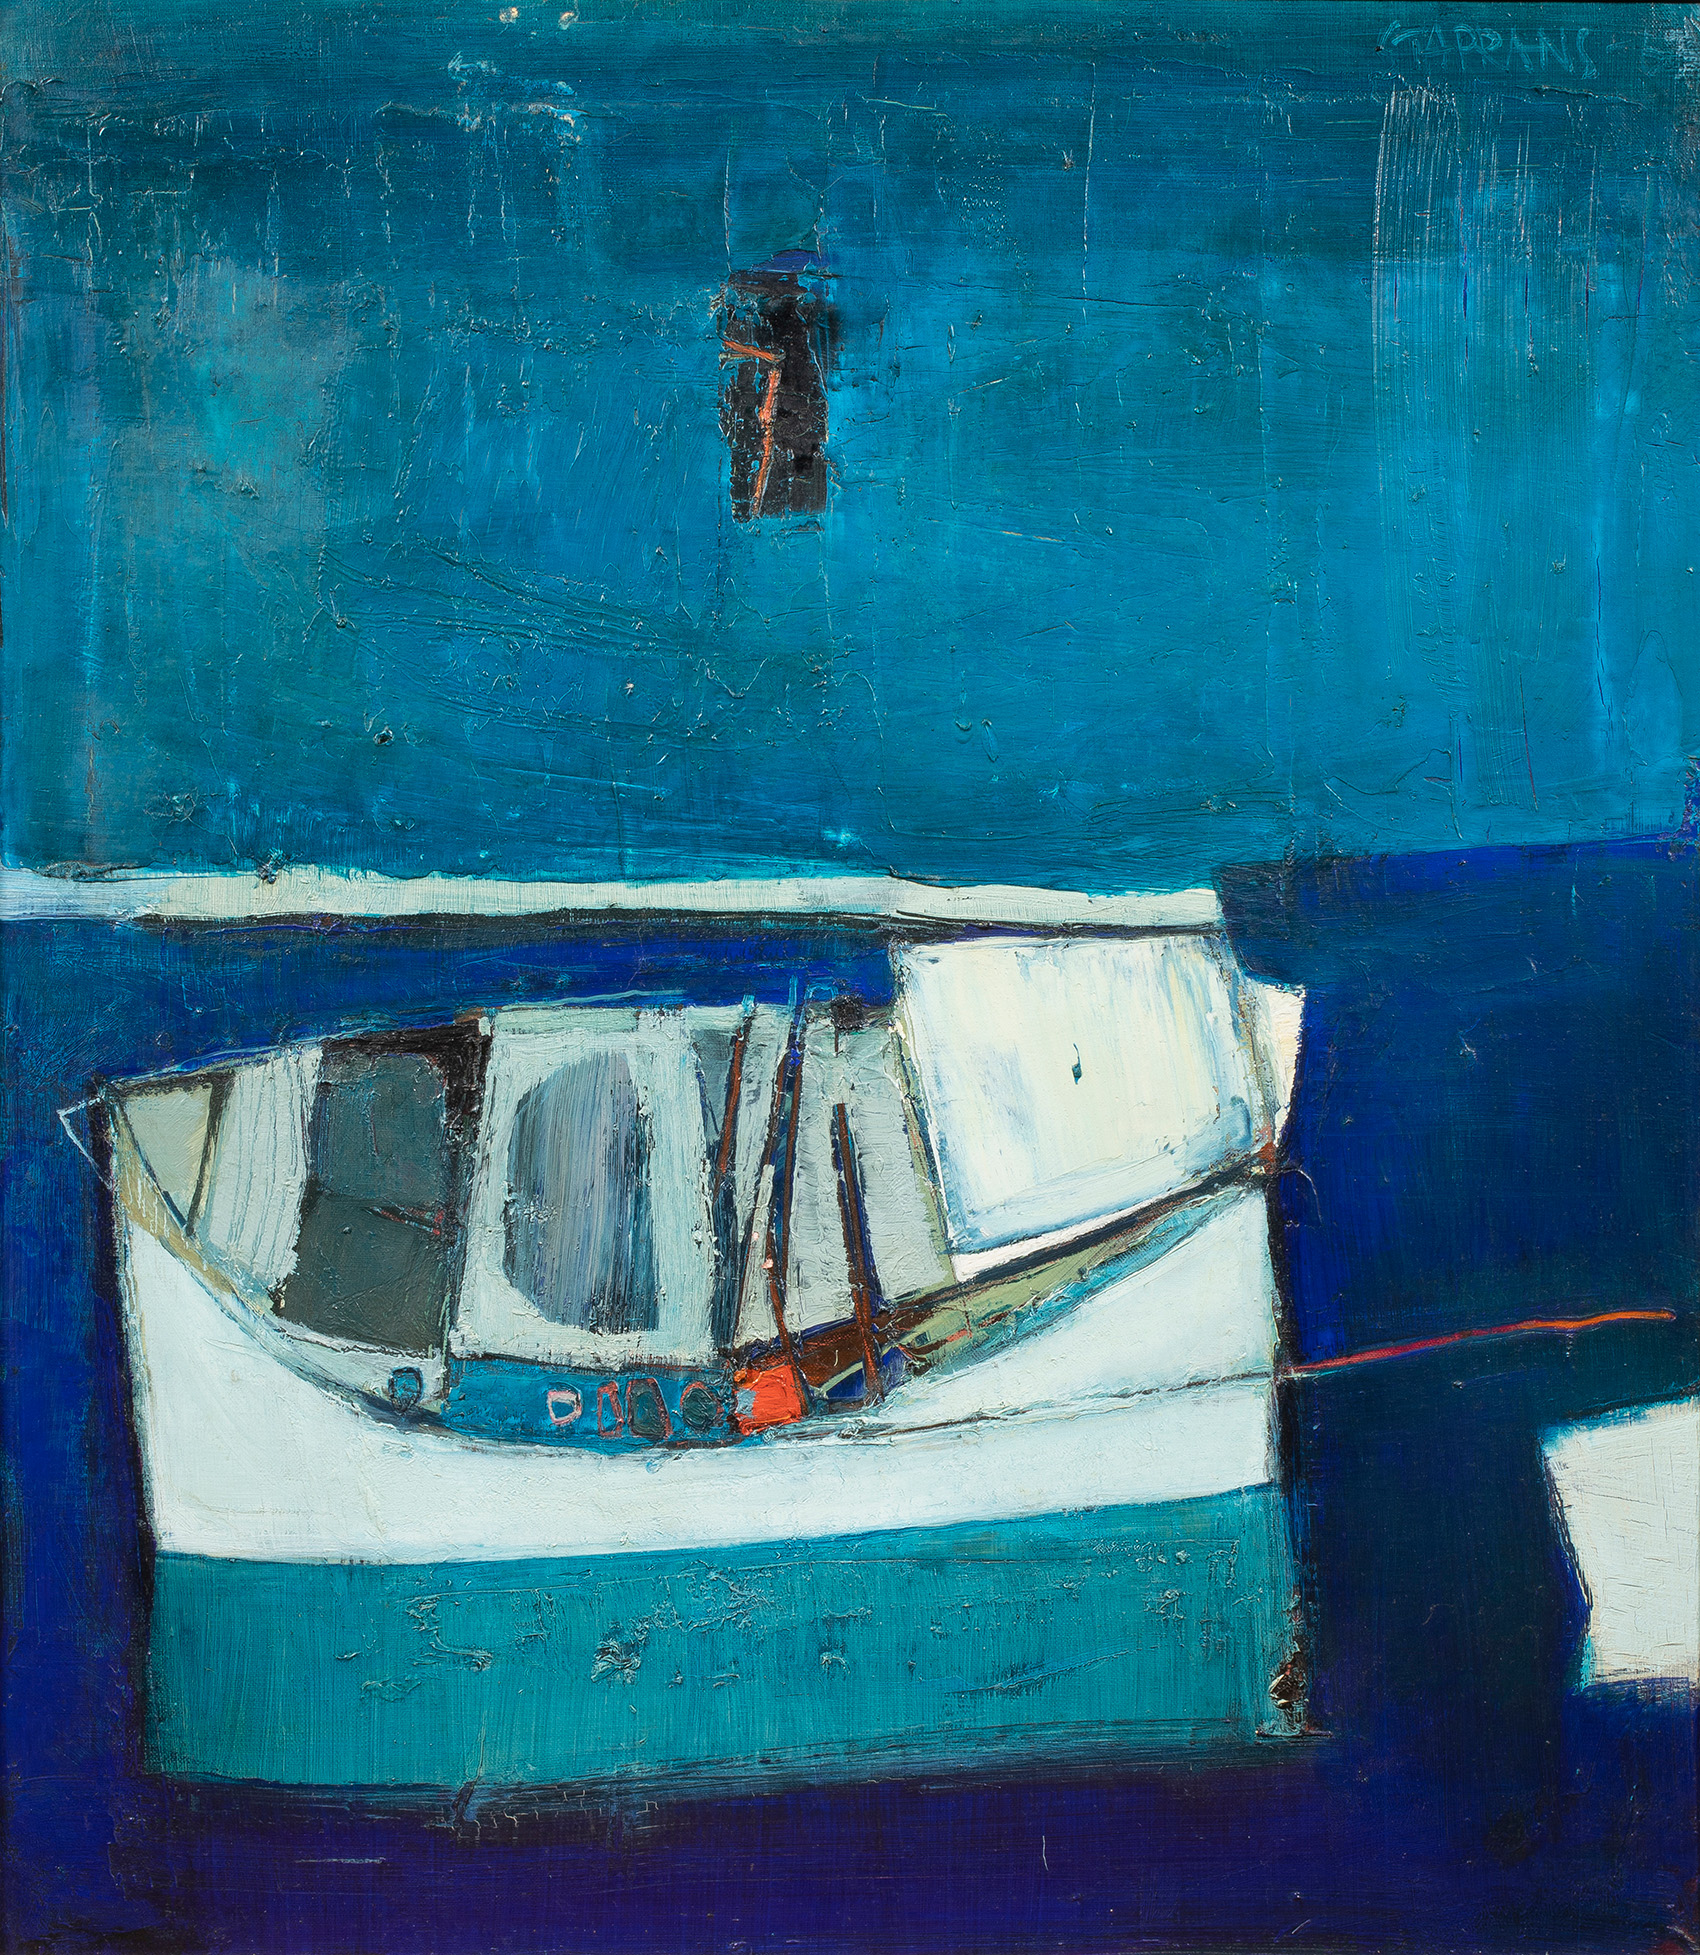 Raimonds Staprans, Boats in Blue Water